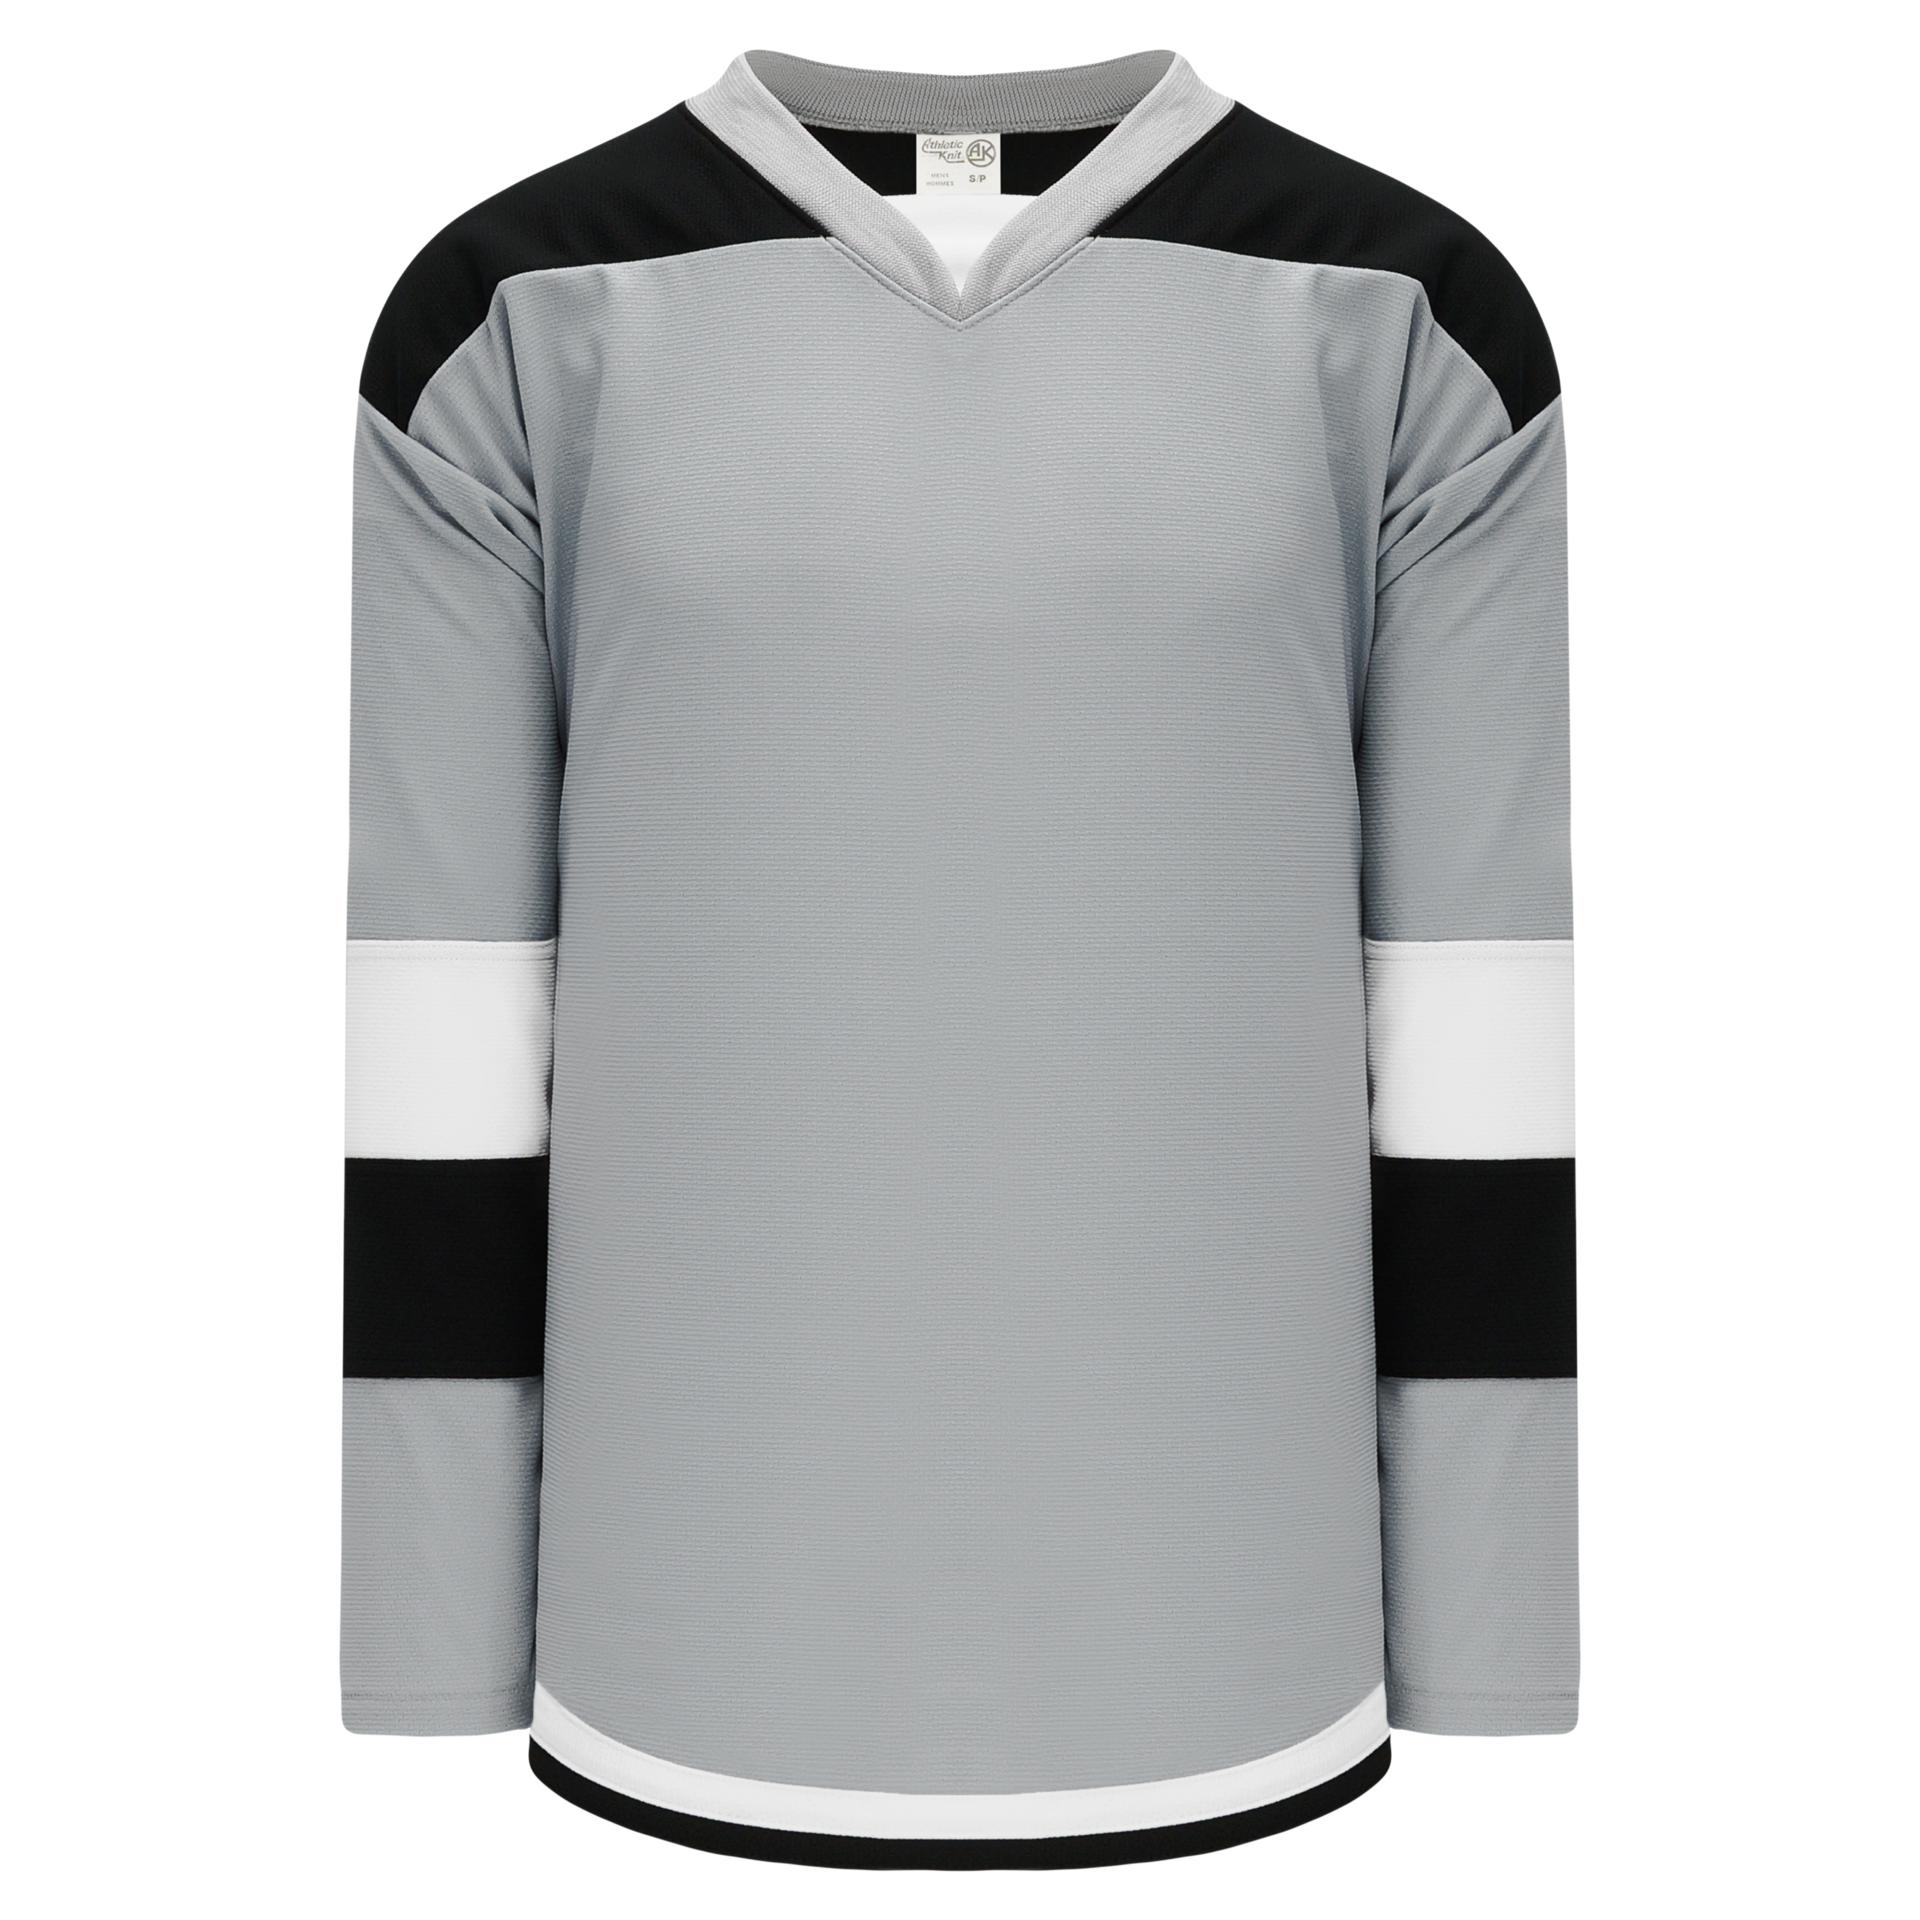 H7400-973 Grey/Black/White League Style Blank Hockey Jerseys Youth Large